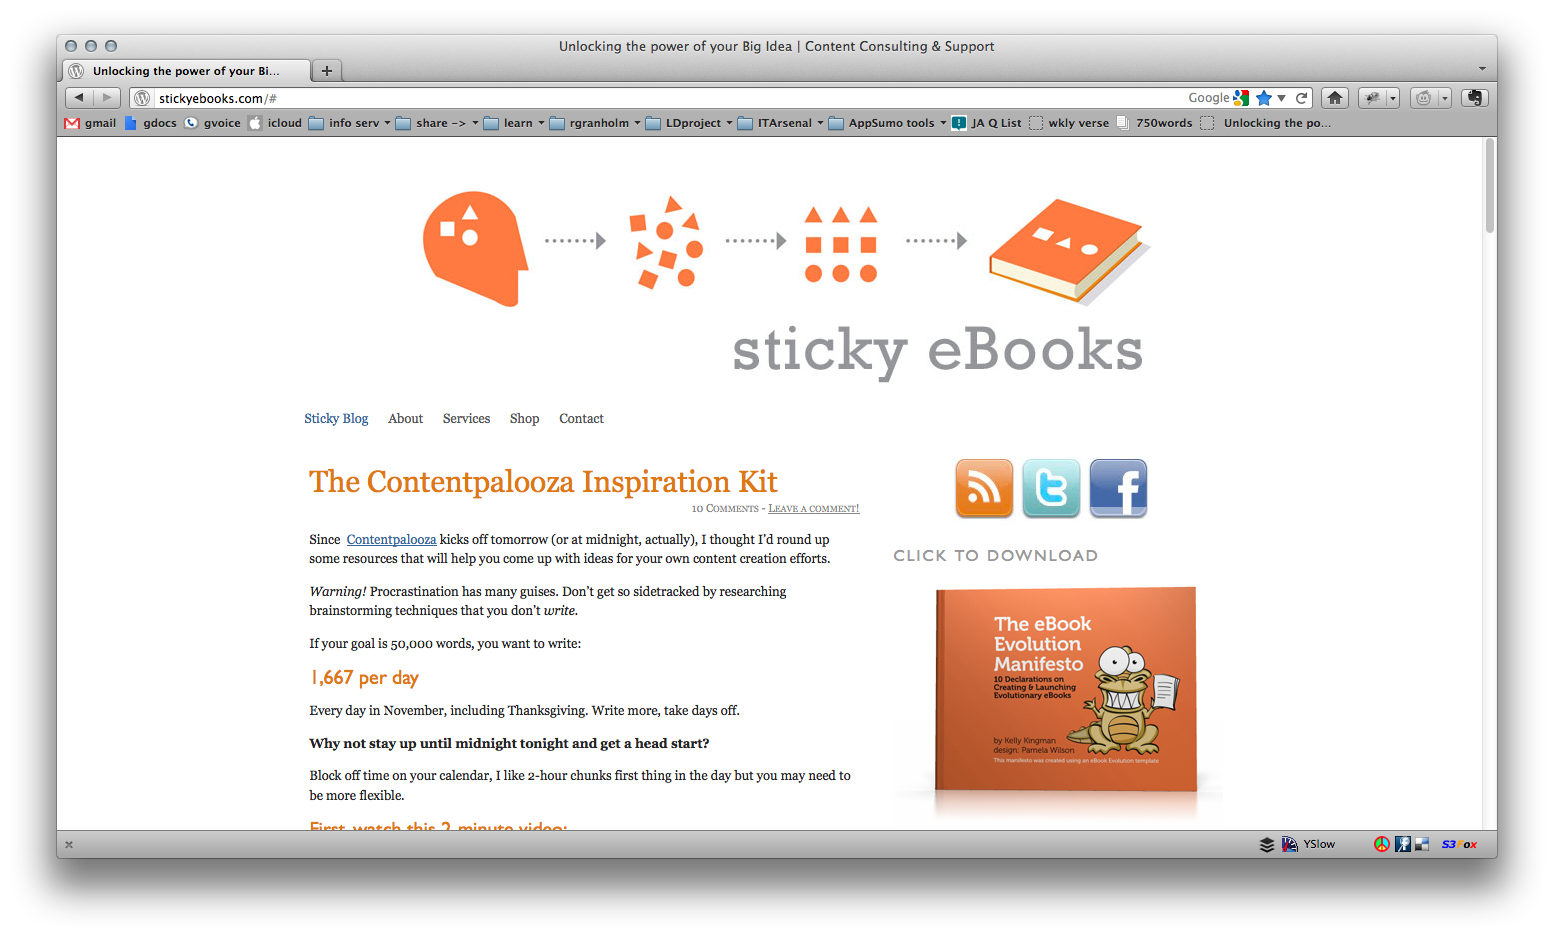 Client Spotlight: Sticky eBooks and Suggestive Advice